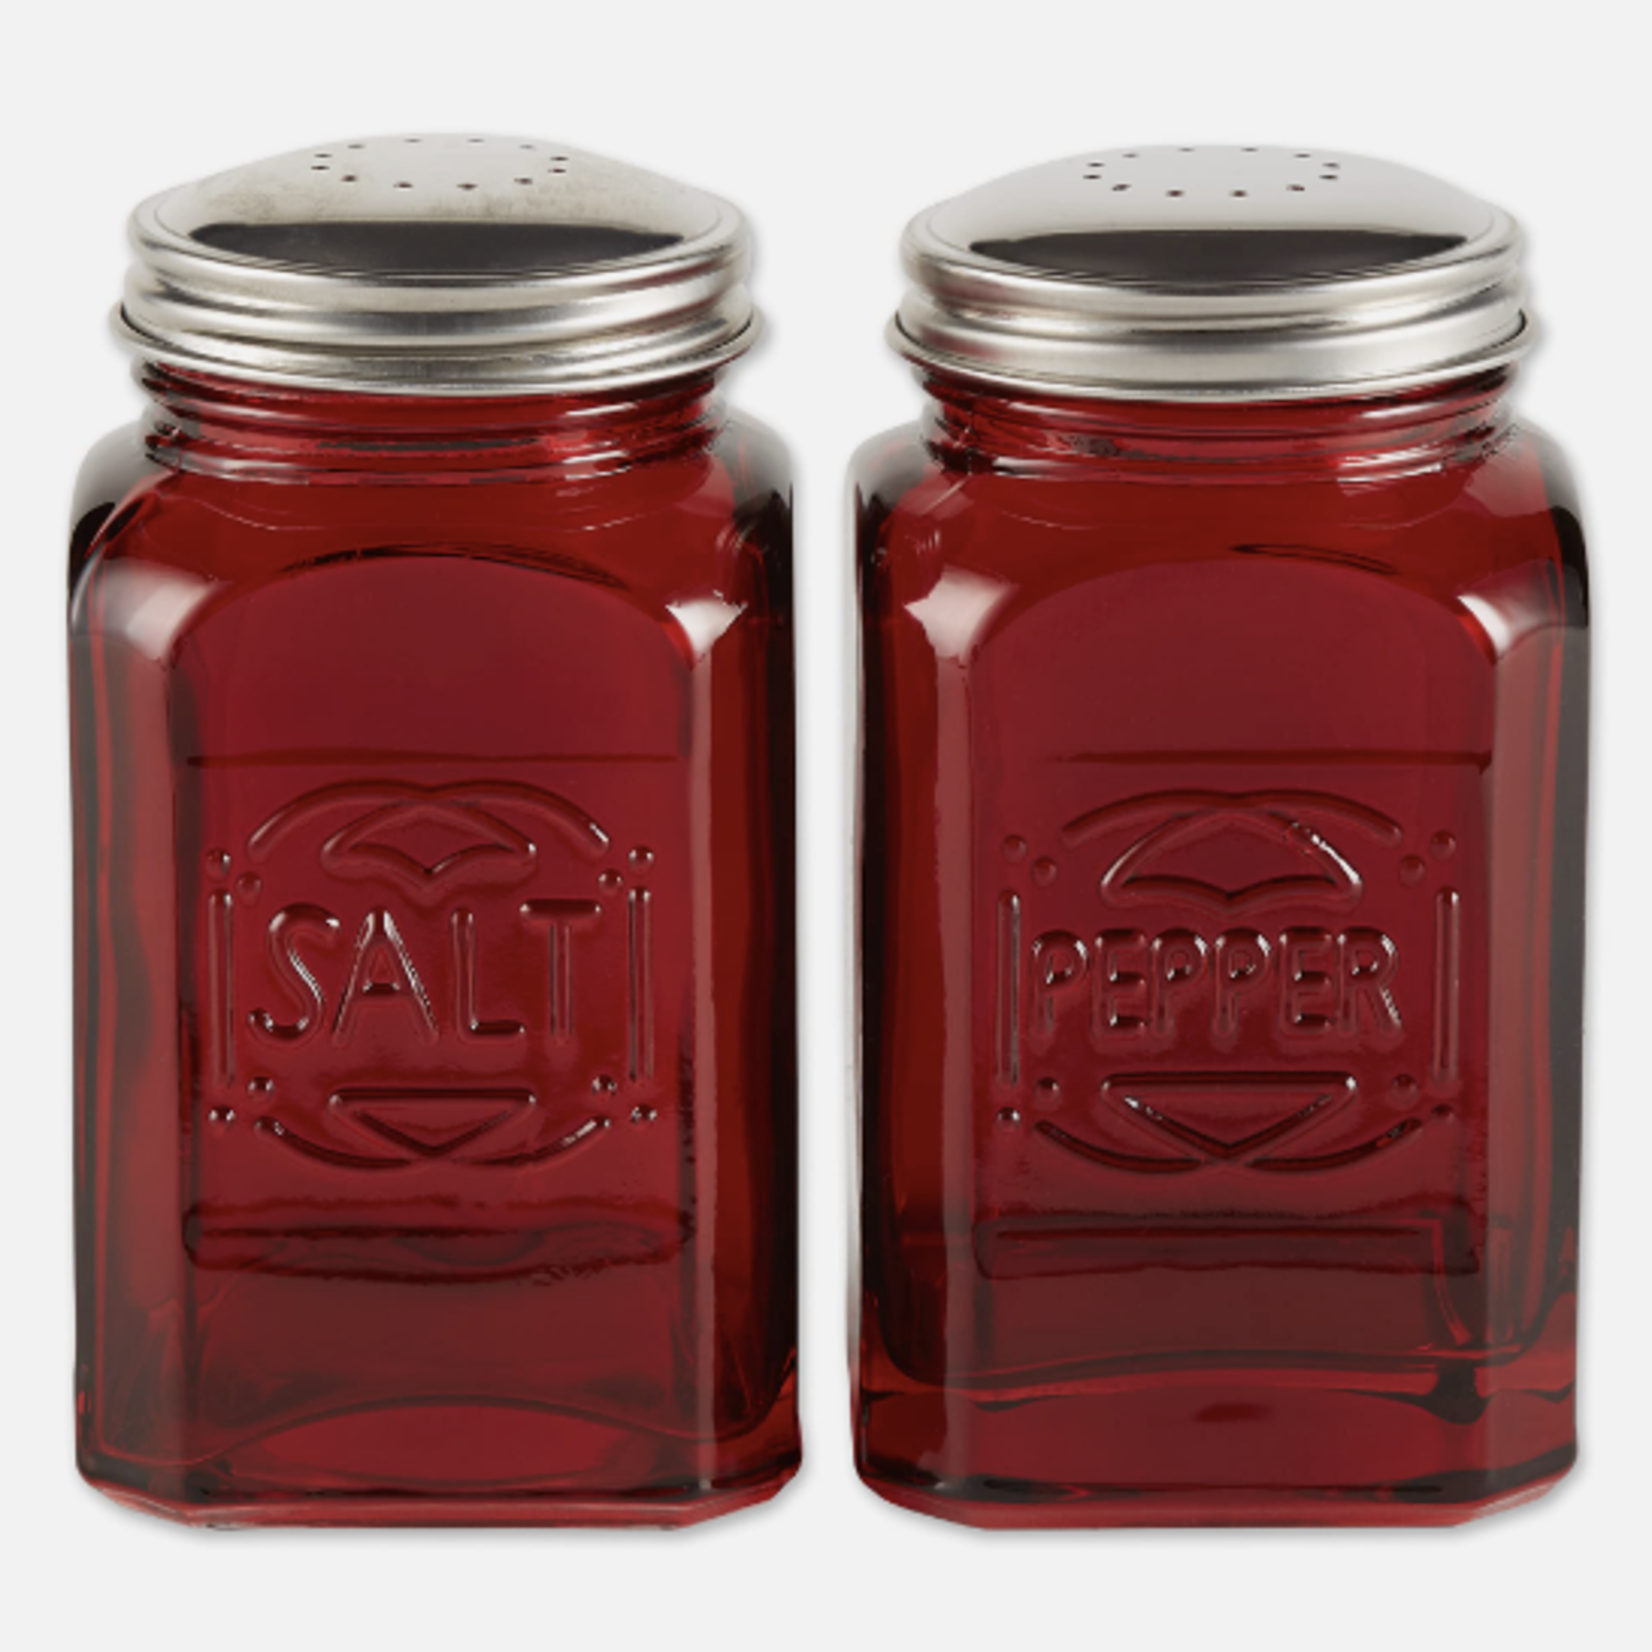 RSVP Retro Salt & Pepper Shakers - Red, 8 oz. (.24L)